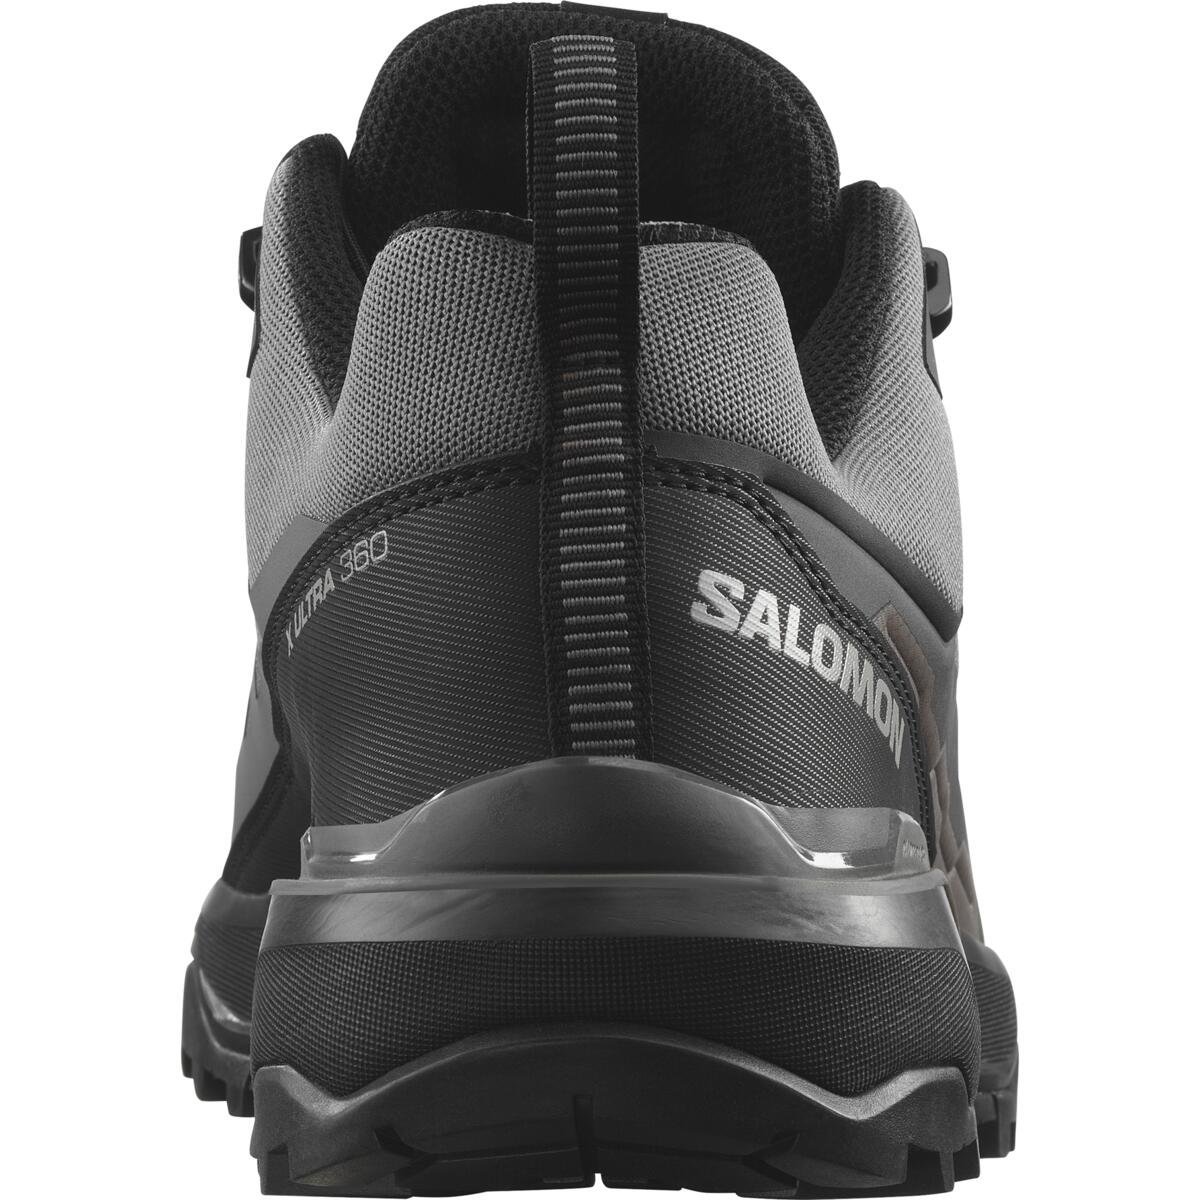 Topánky Salomon X Ultra 360 M - grey